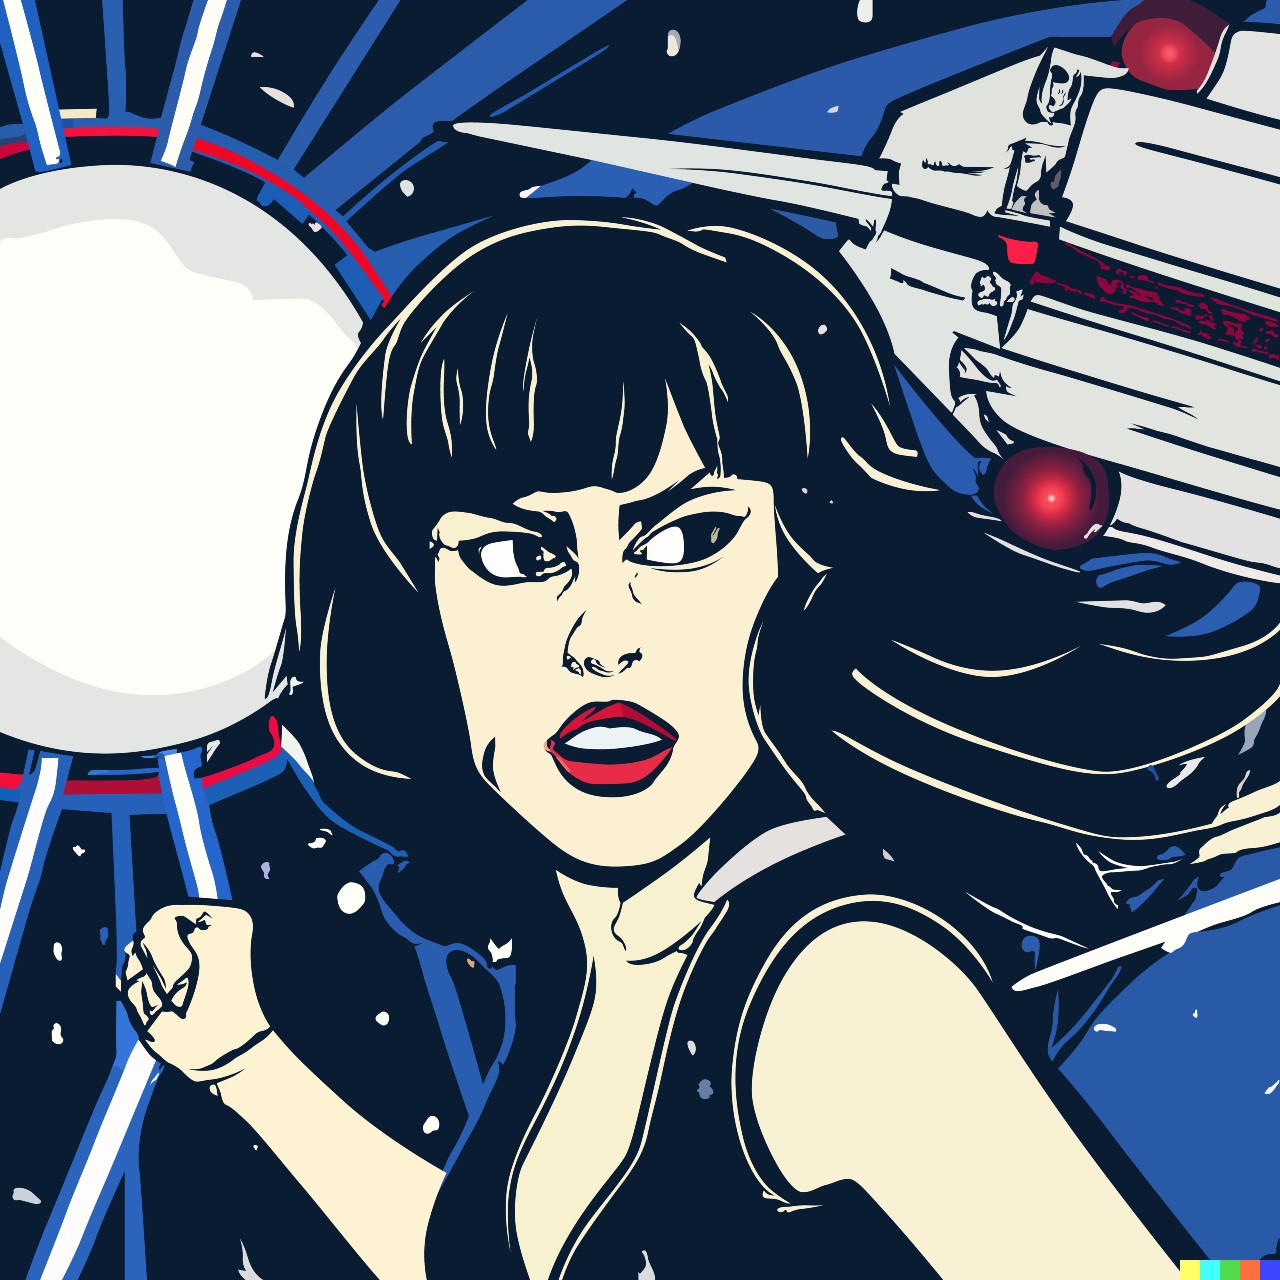 SPACE HEROINE / heroine with dark hair fighting in space satellites in the back, comic style